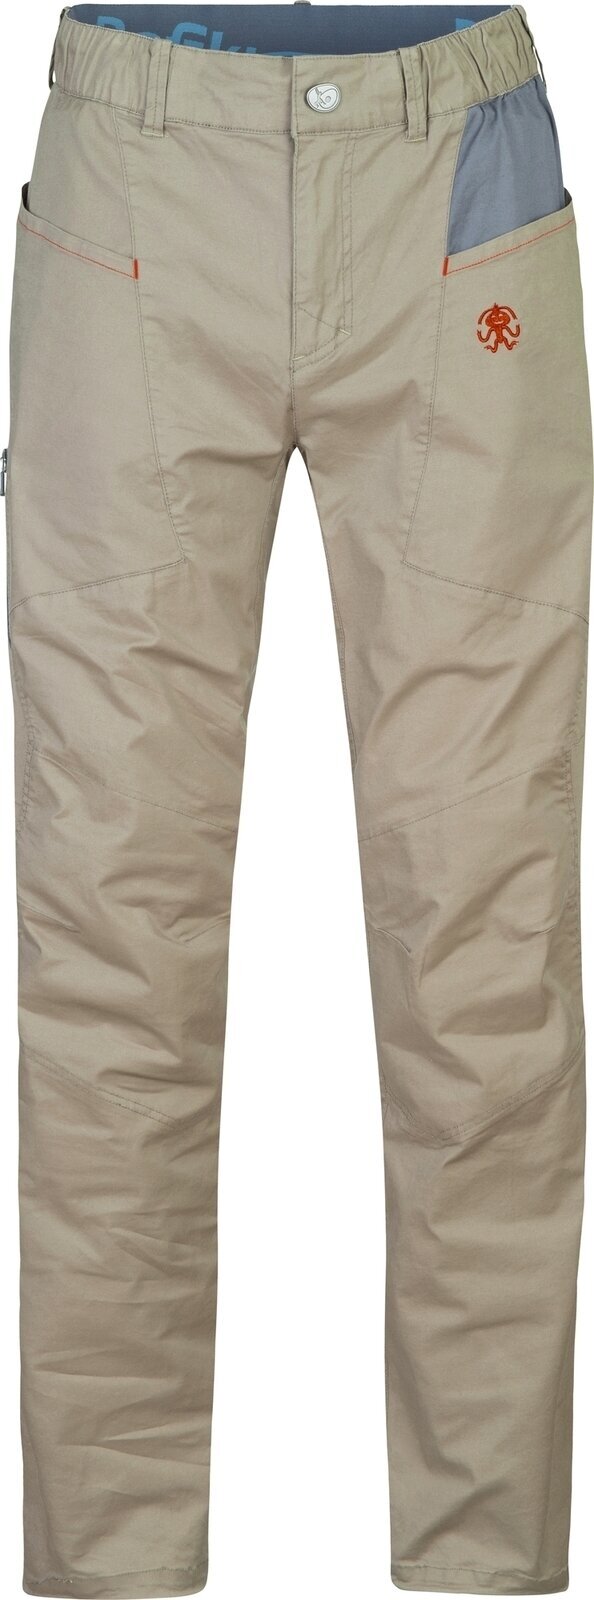 Outdoorhose Rafiki Crag Man Pants Brindle/Ink XL Outdoorhose